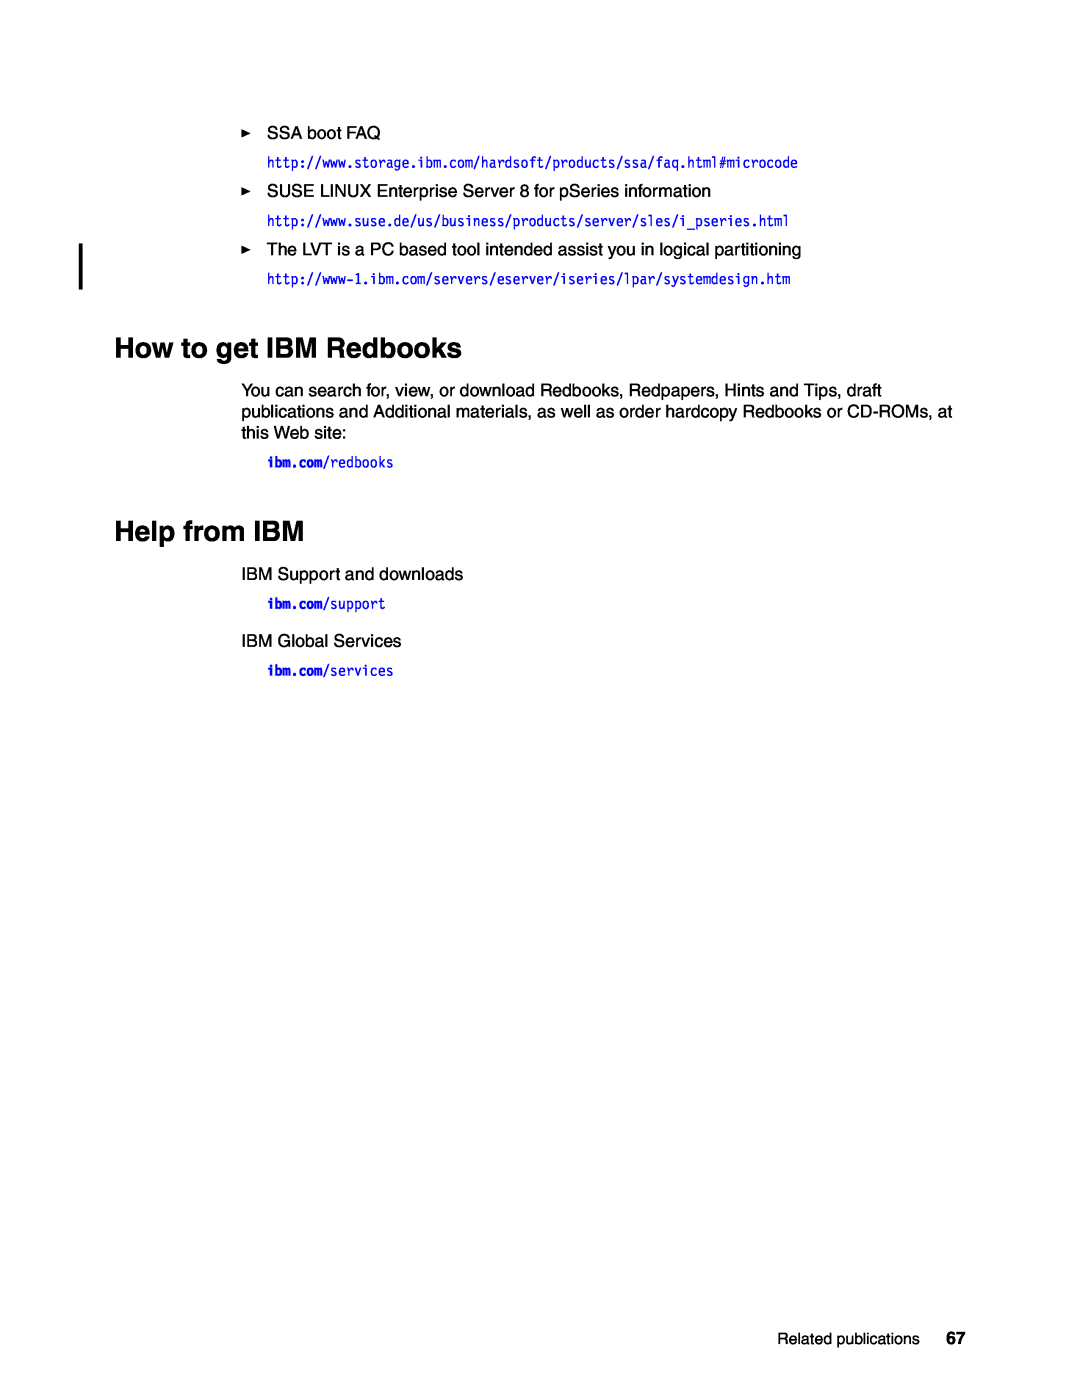 IBM P5 570 manual How to get IBM Redbooks, Help from IBM 